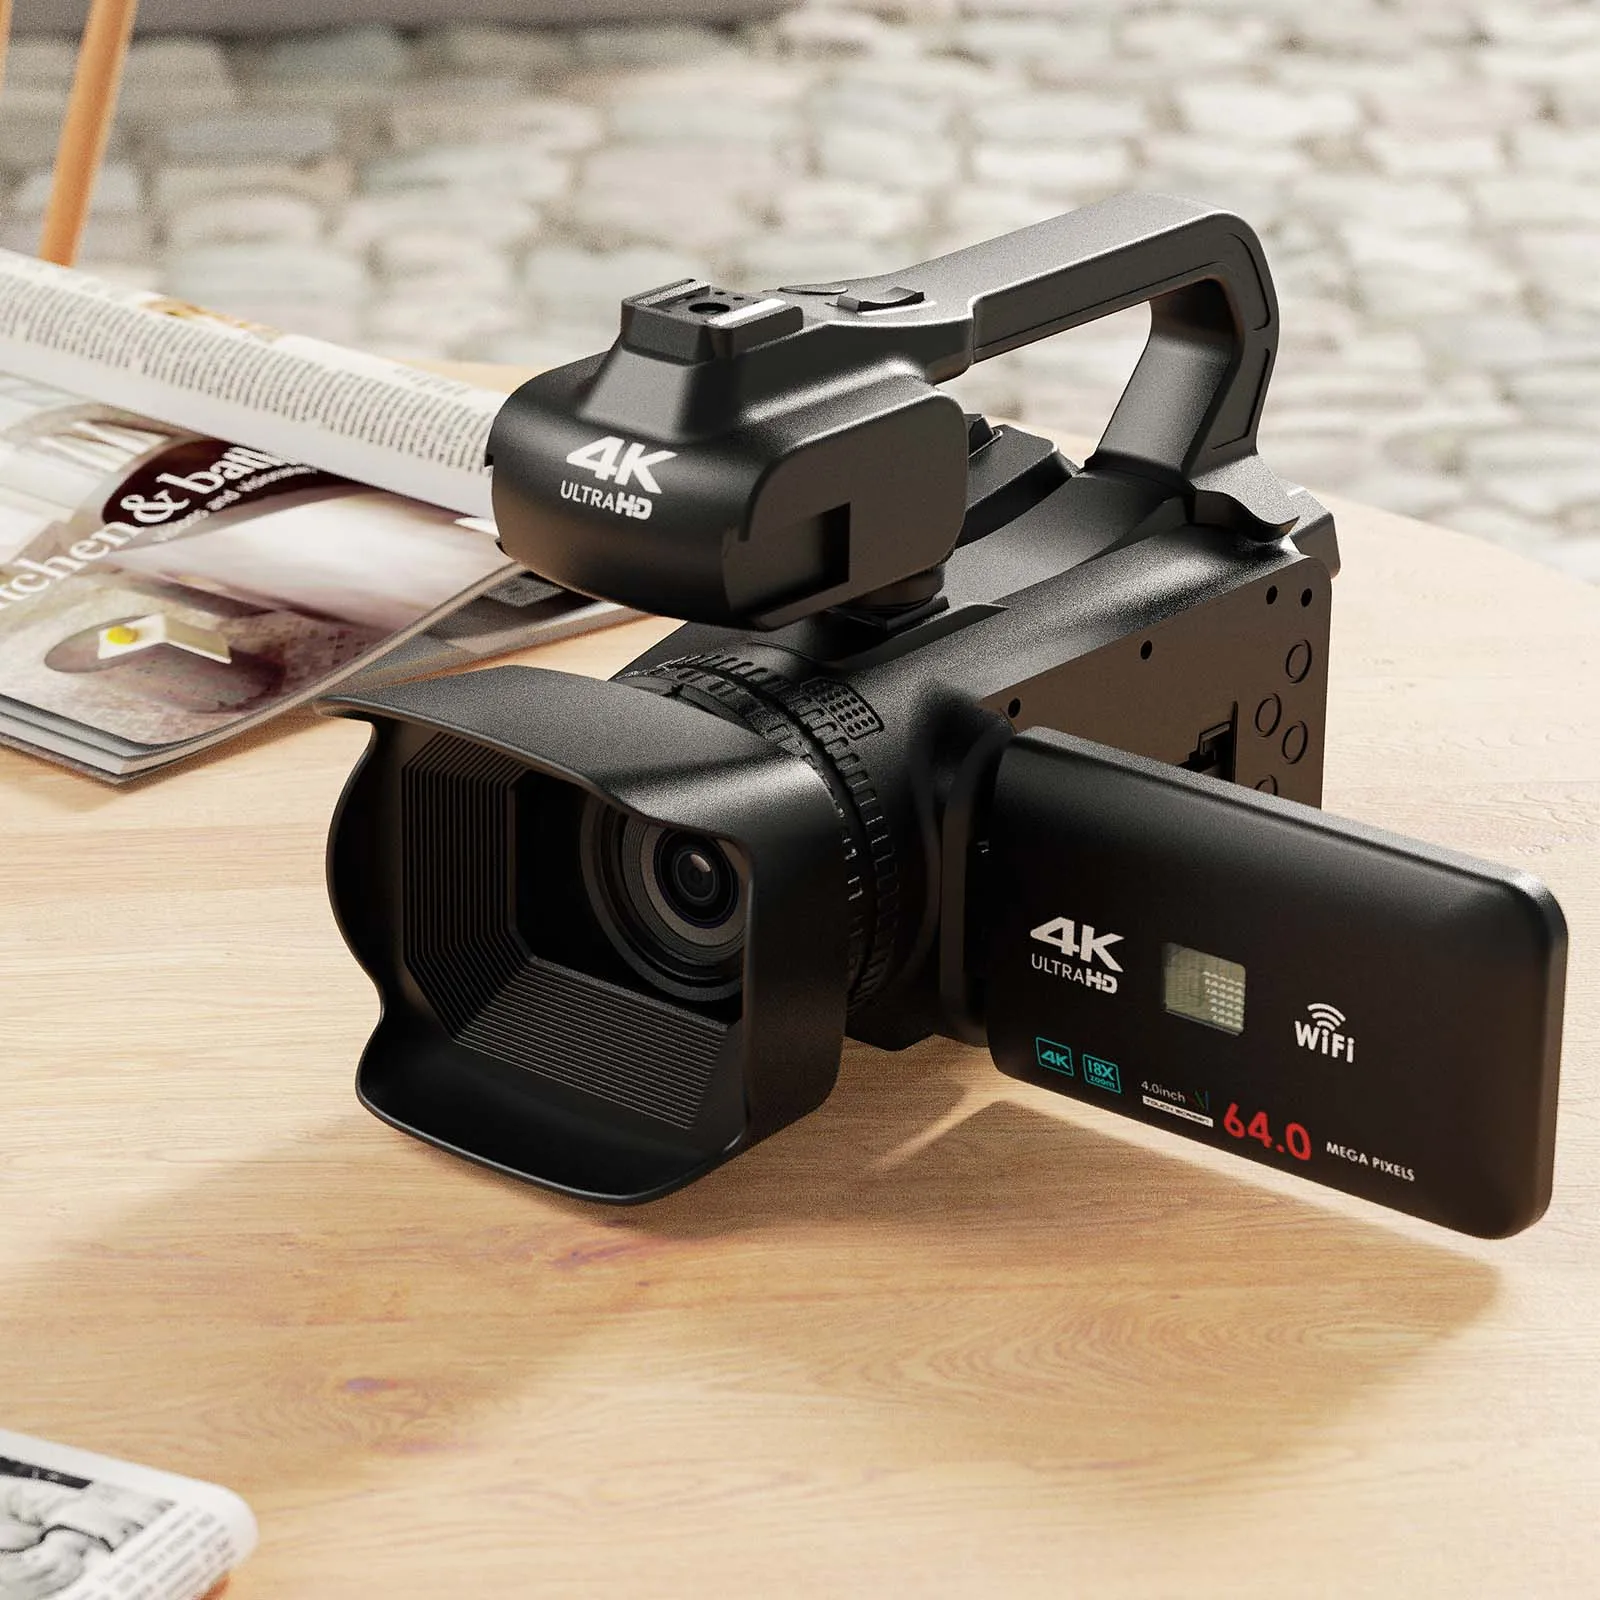 stabilizer camera videos with video and audio recording dash cam 4k professional digital video cameras